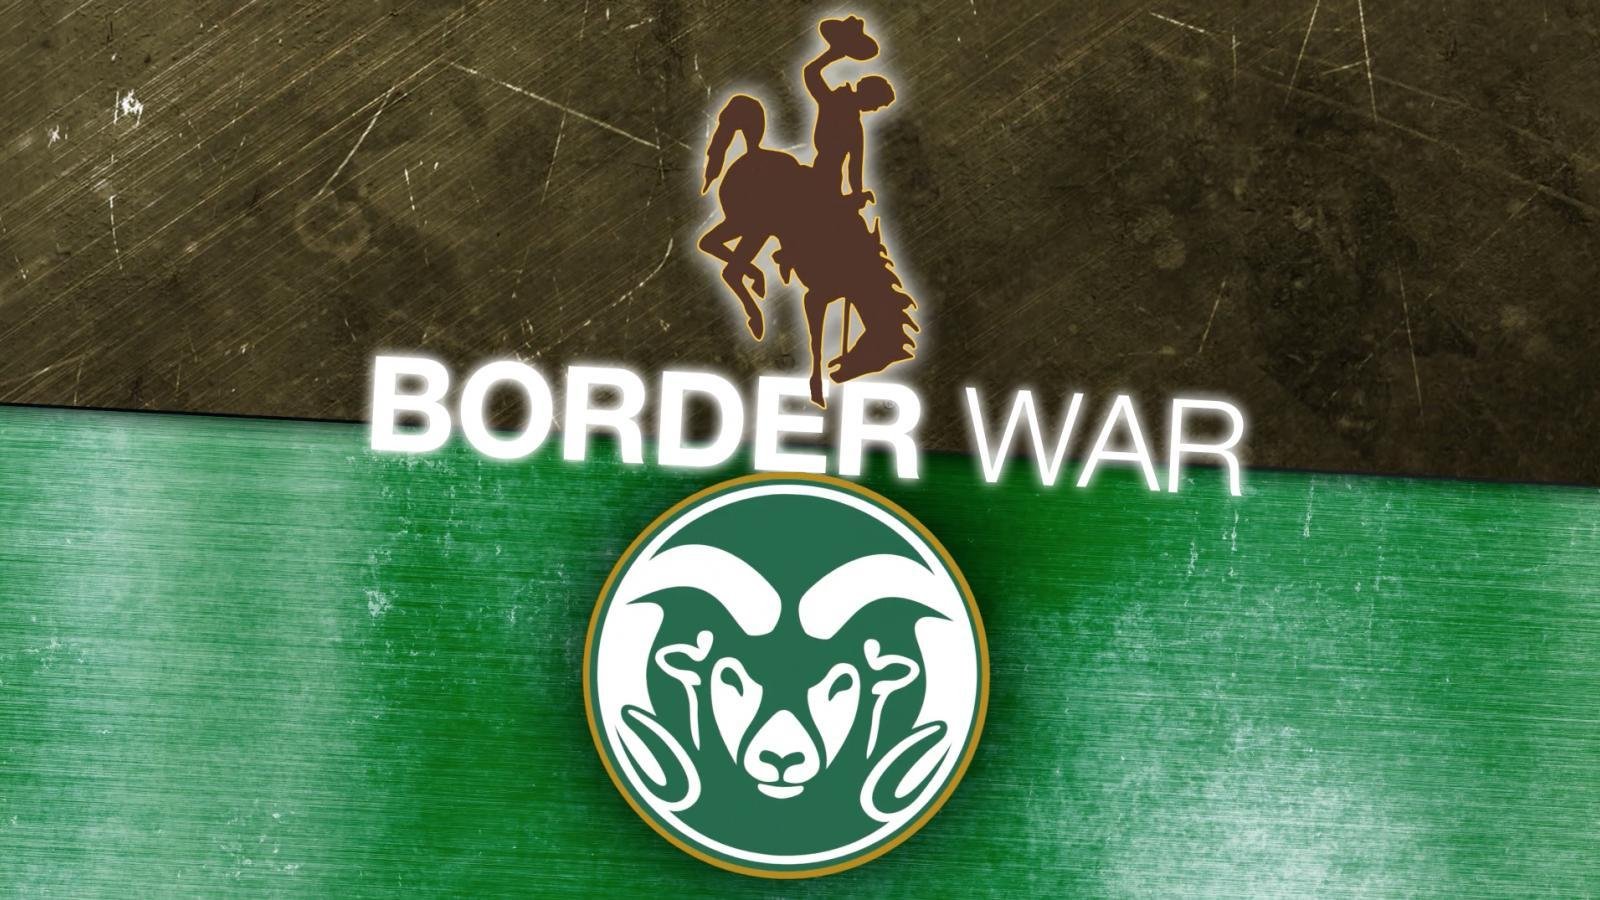 Colorado State vs. Wyoming State border war